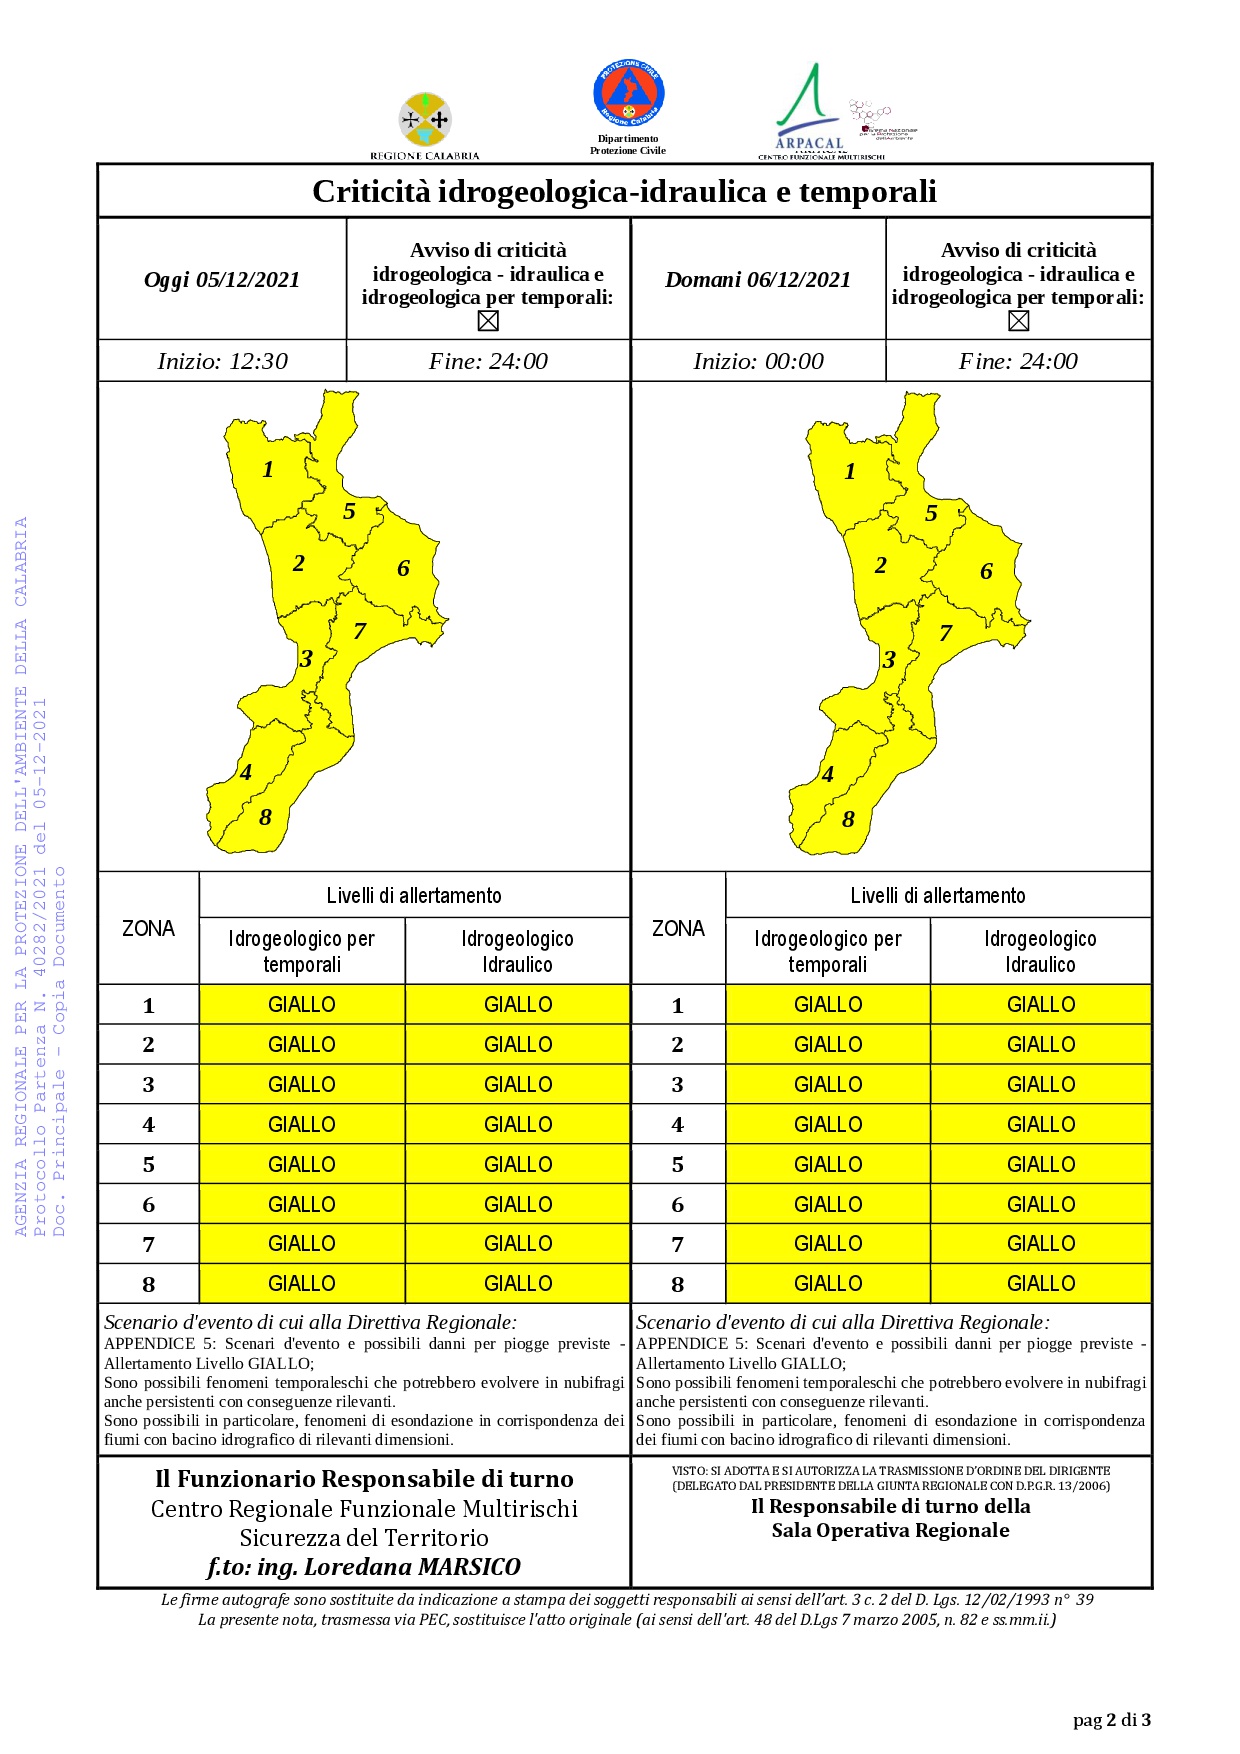 Criticità idrogeologica-idraulica e temporali in Calabria 05-12-2021